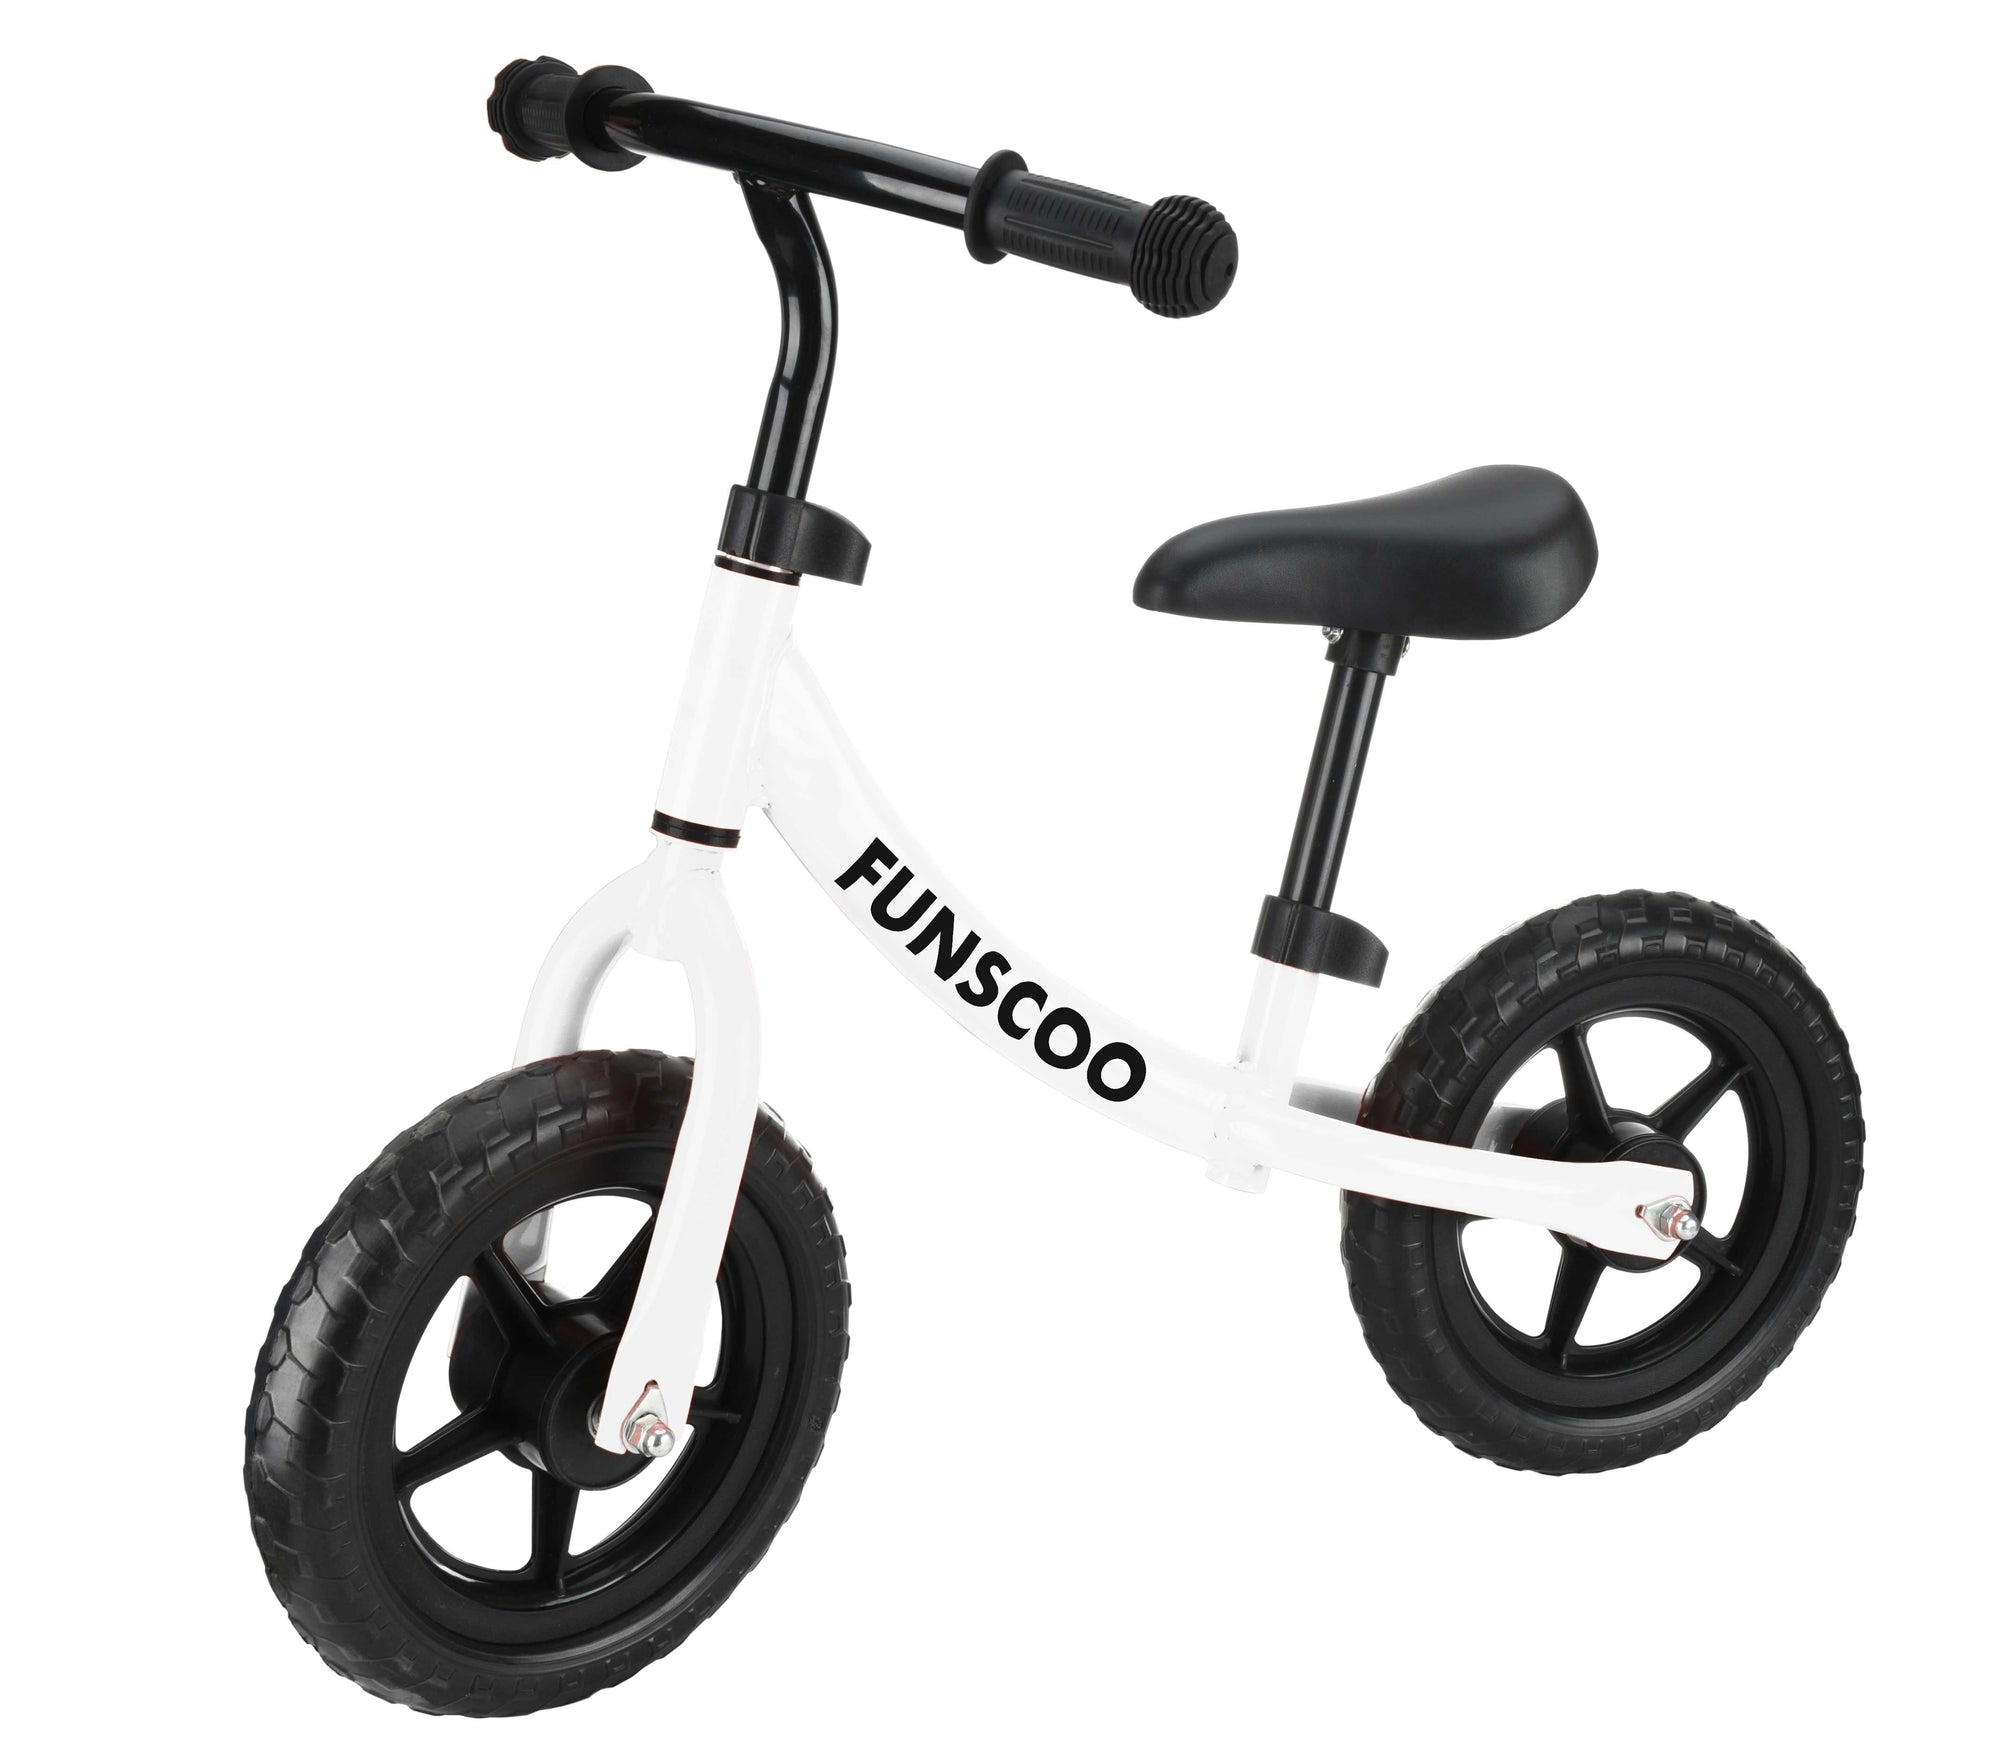 FunScoo balanscykel